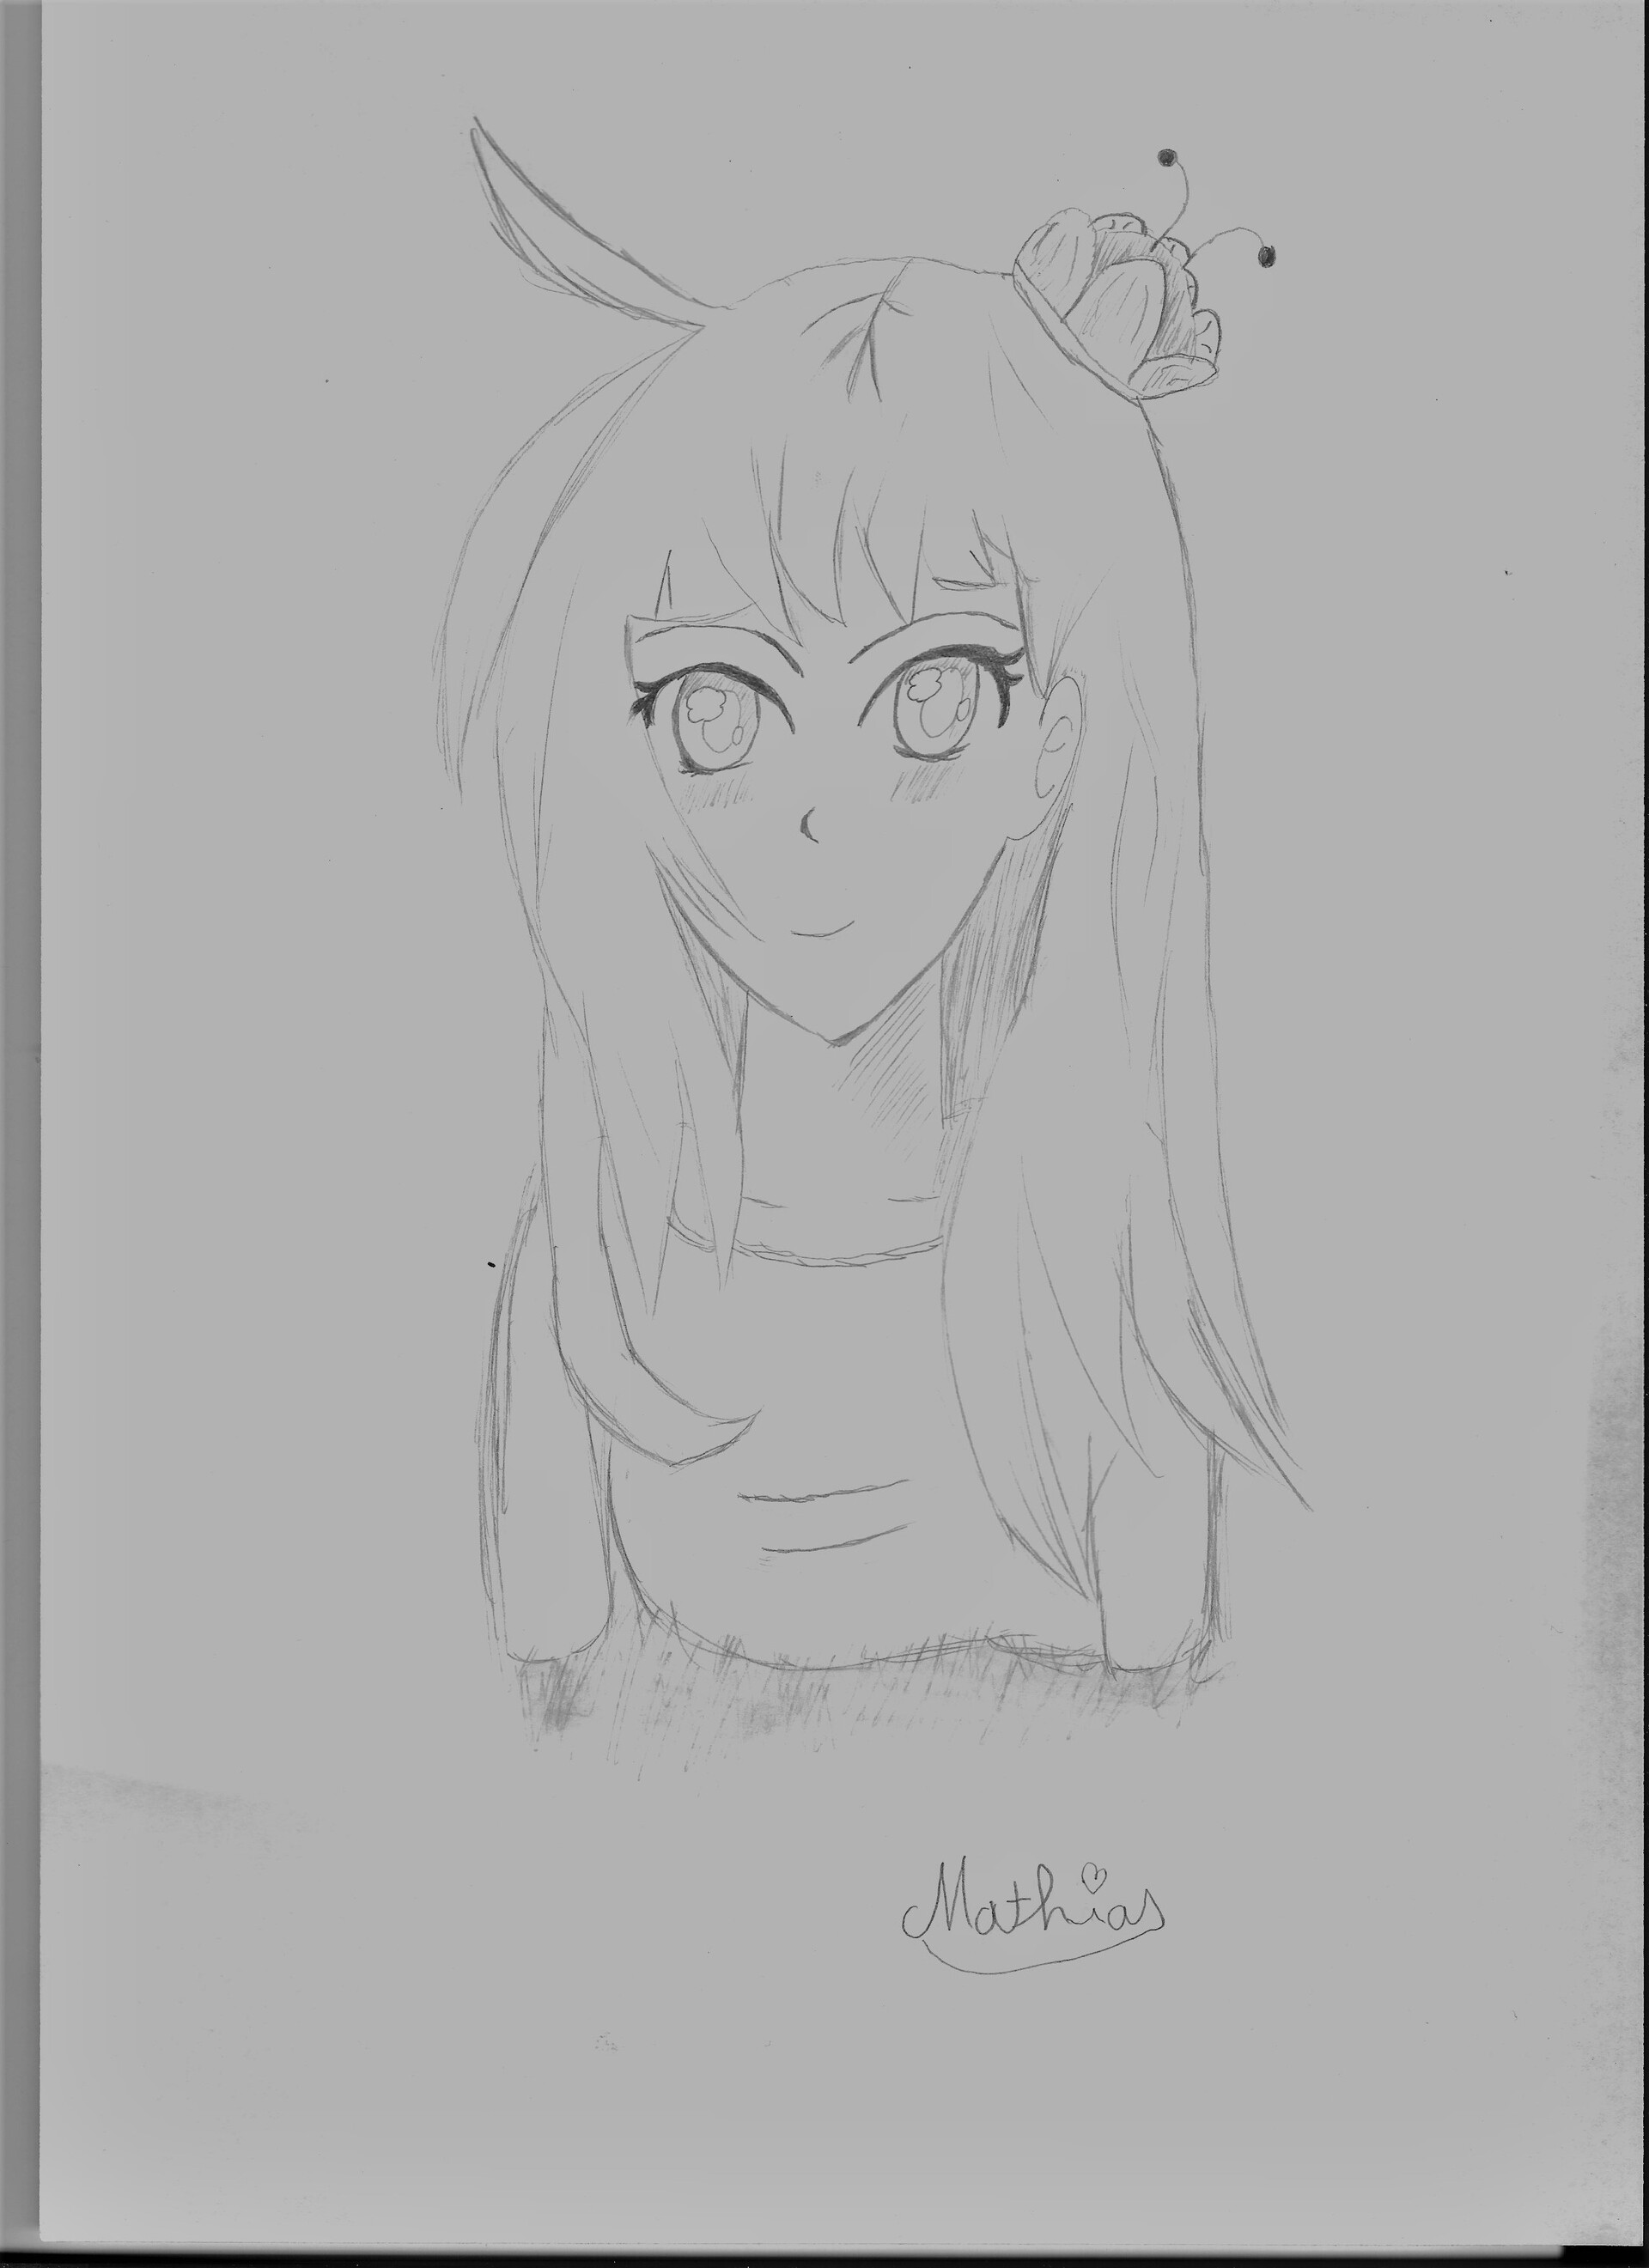 ArtStation - Anime girl drawing